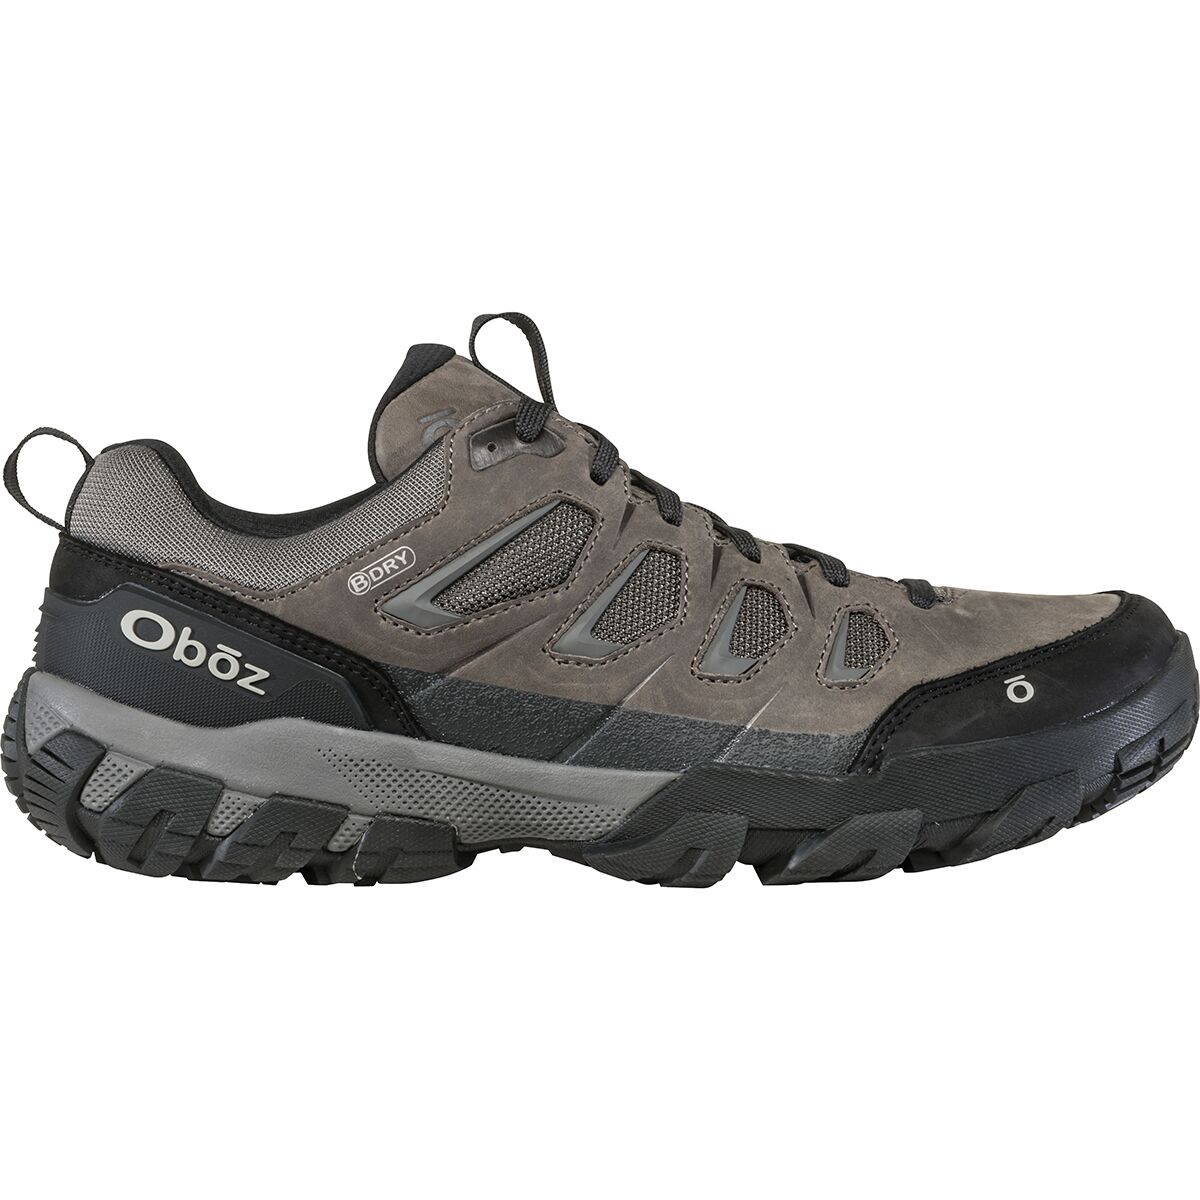 Oboz Sawtooth X Low B-Dry Shoe - Wide - Men's - Footwear